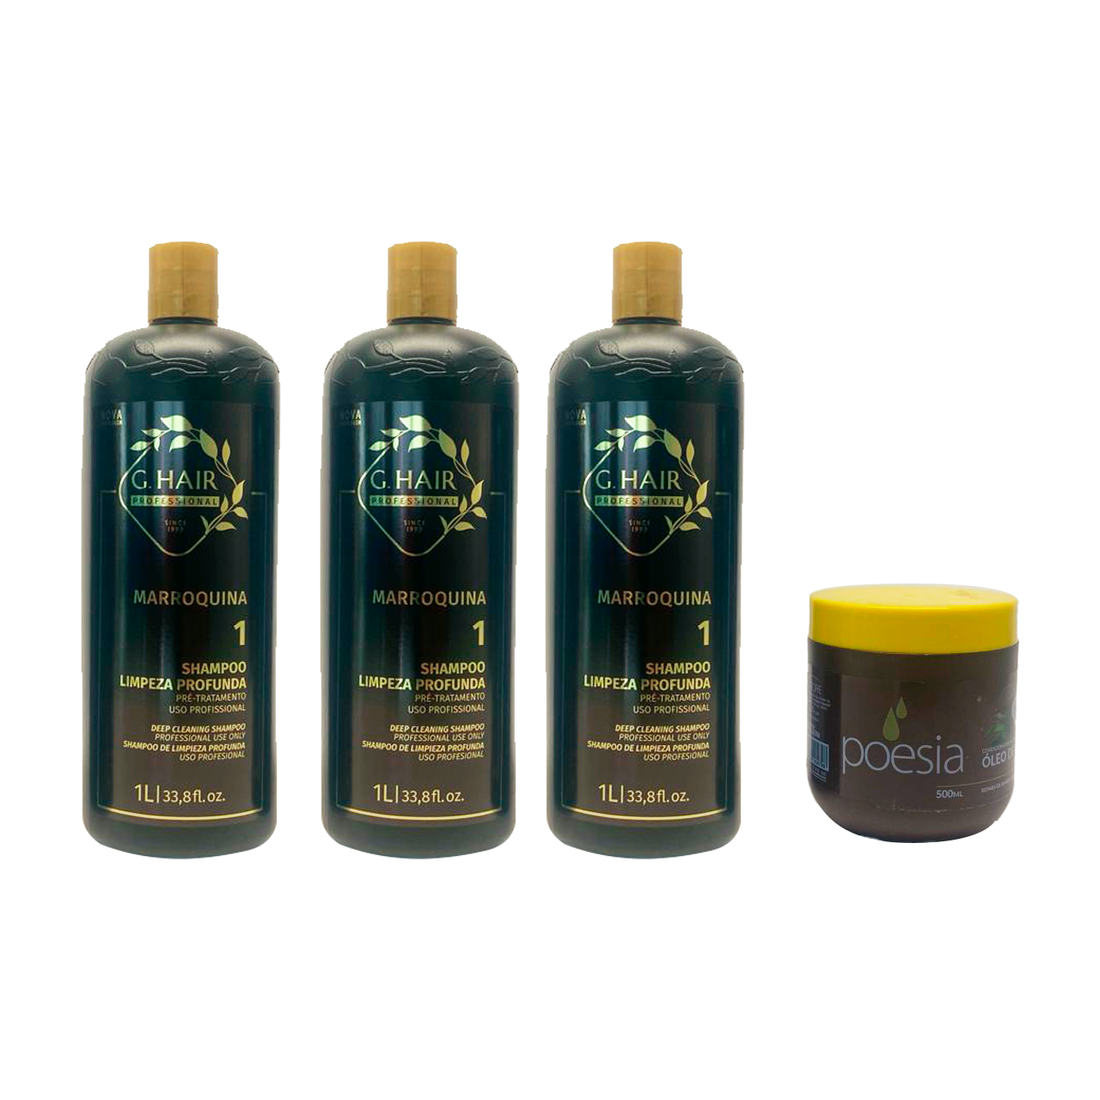 G Hair, Marroquina Deep Cleansing Shampoo, 3x1L + Poesia Oleo de Coco, Hair Mask, 500g